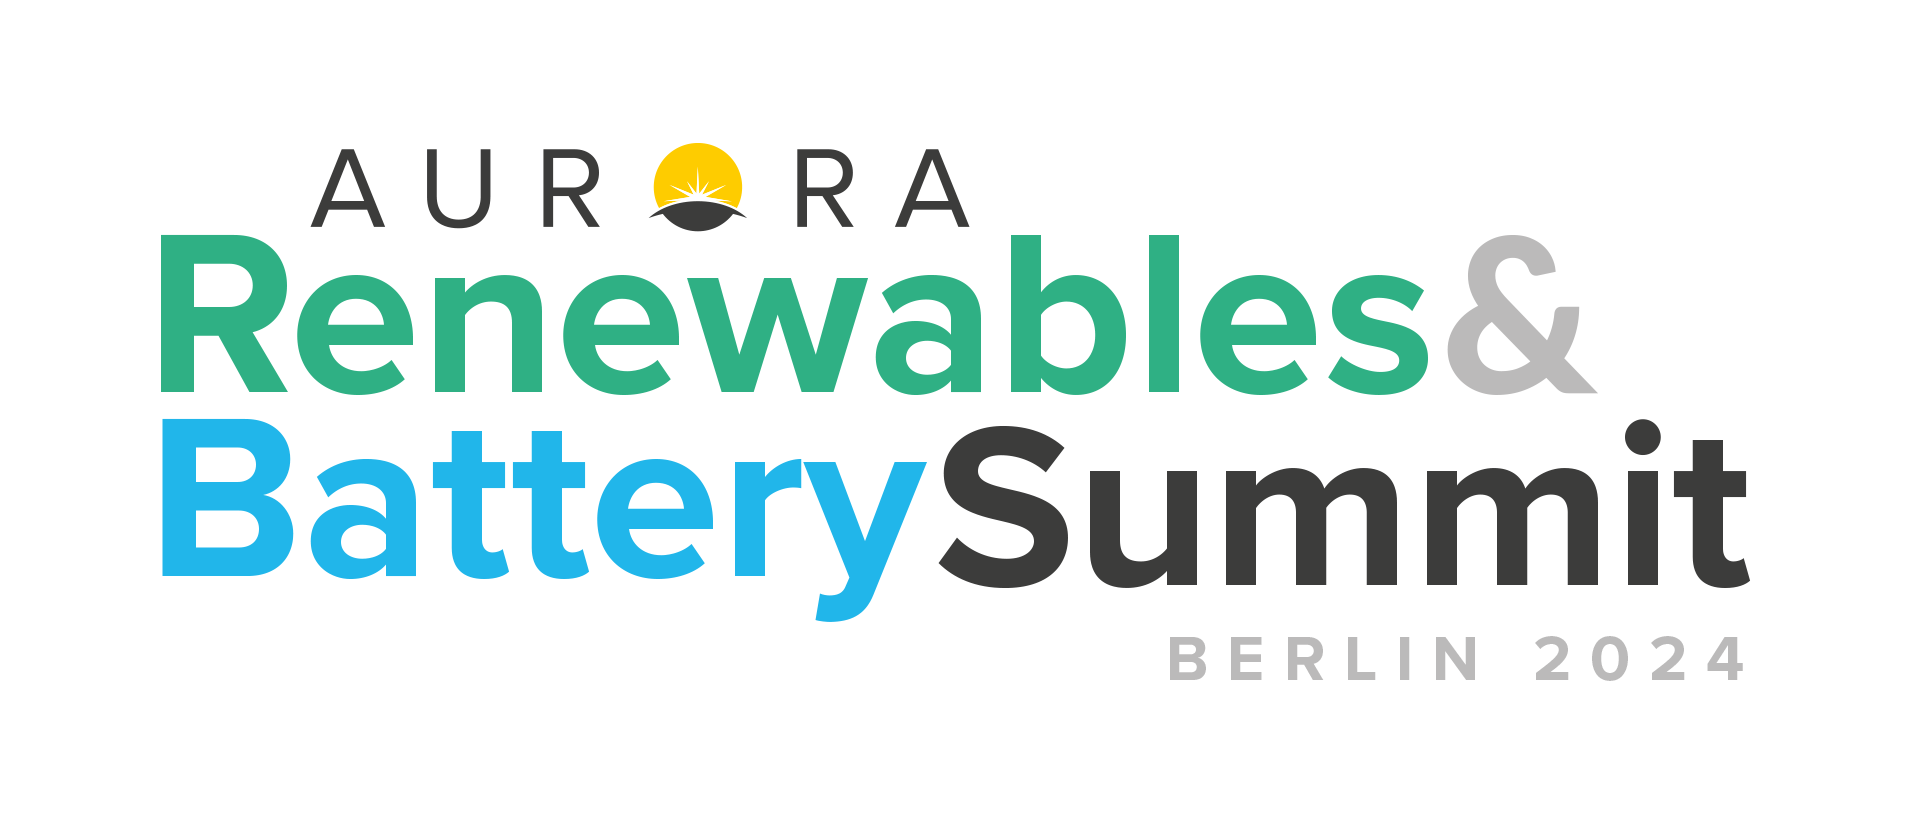 Aurora Renewables & Battery Summit Berlin 2024